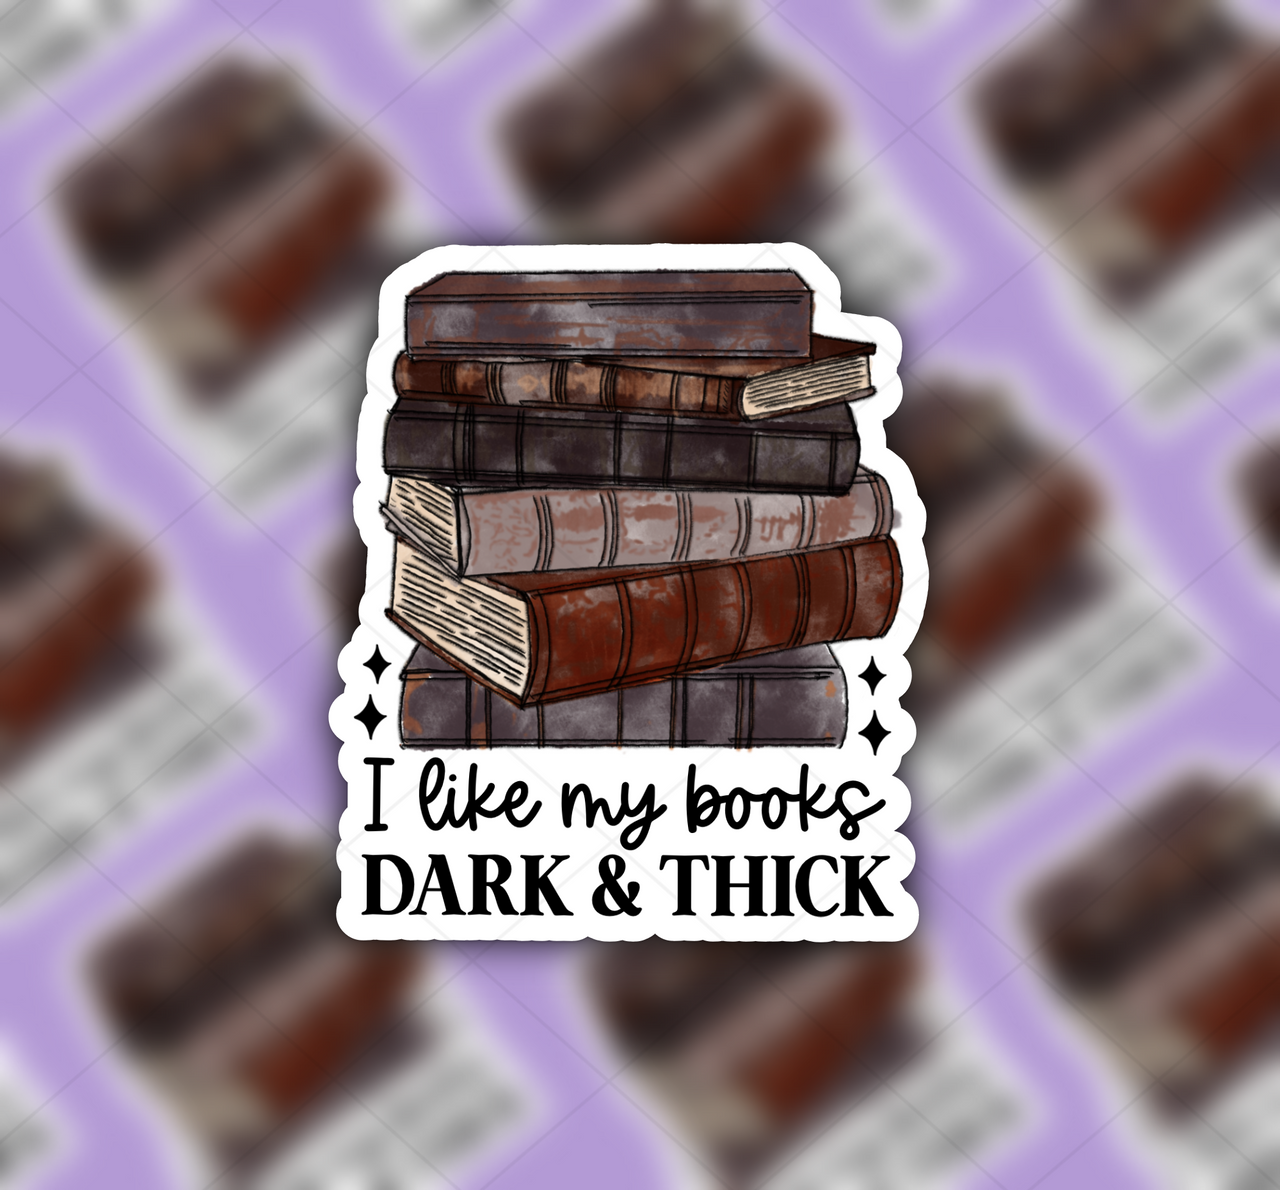 I like my books dark and thick